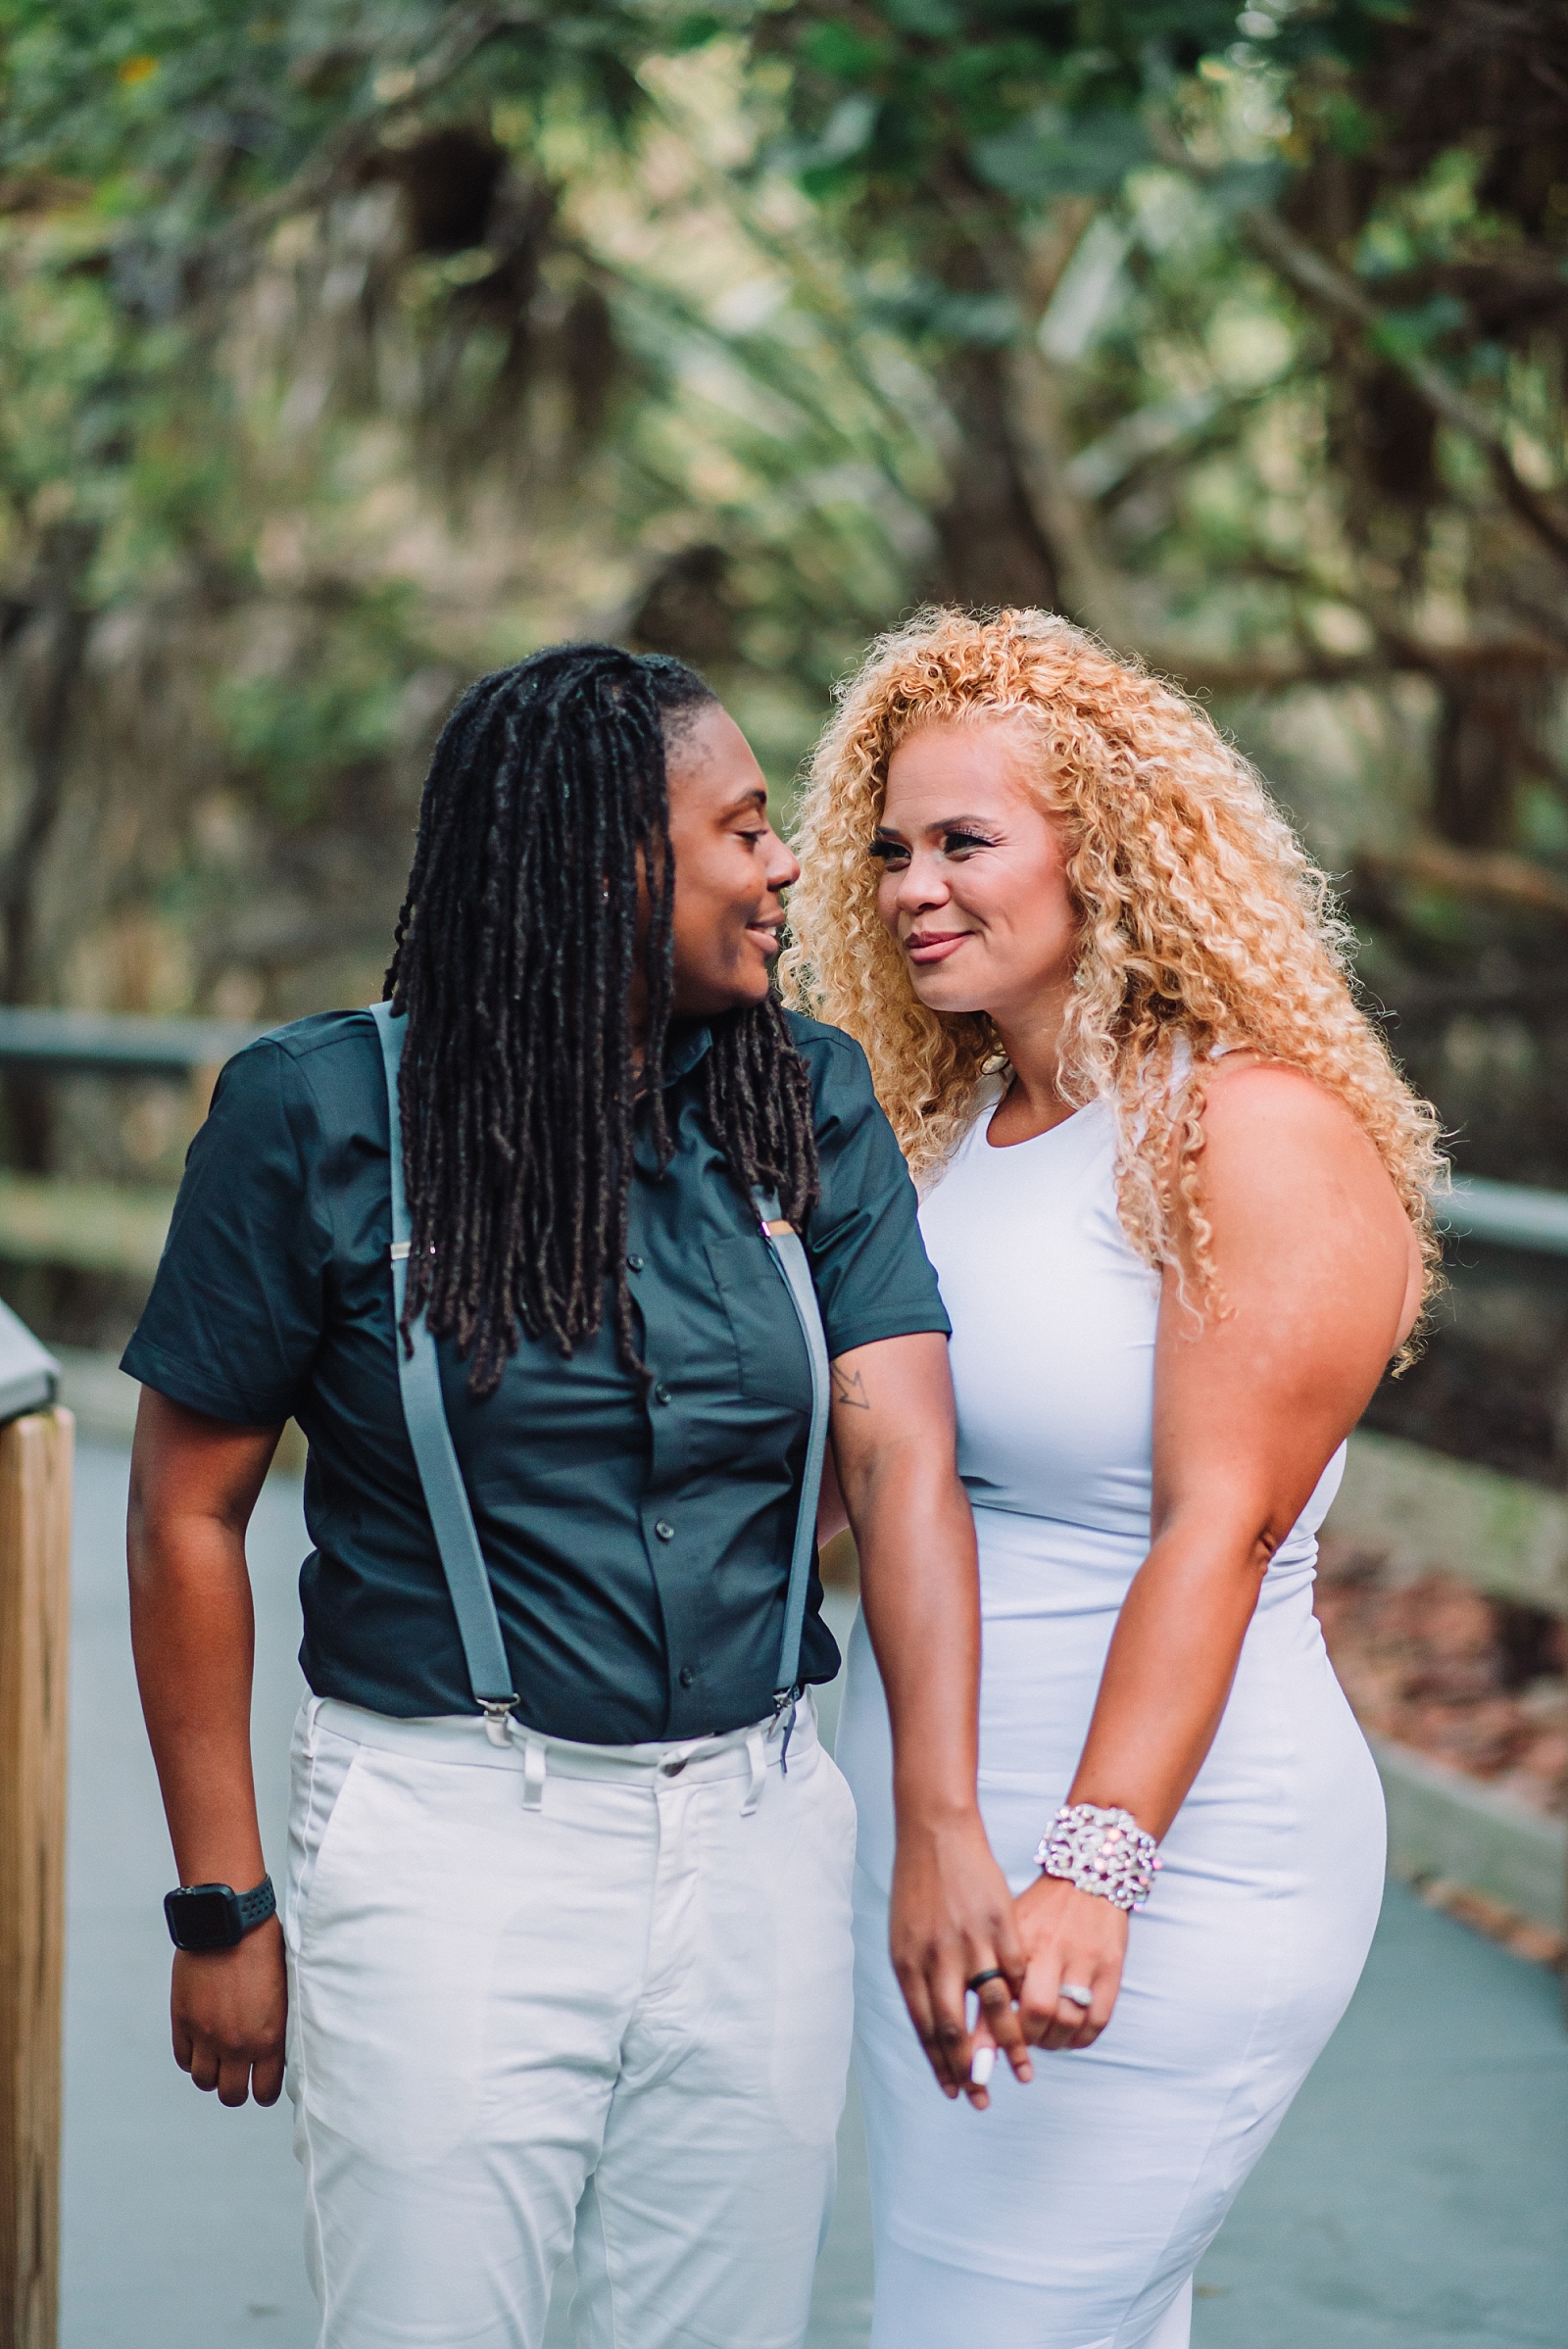 Beautiful bi-racial lesbian couple celebrated engagements